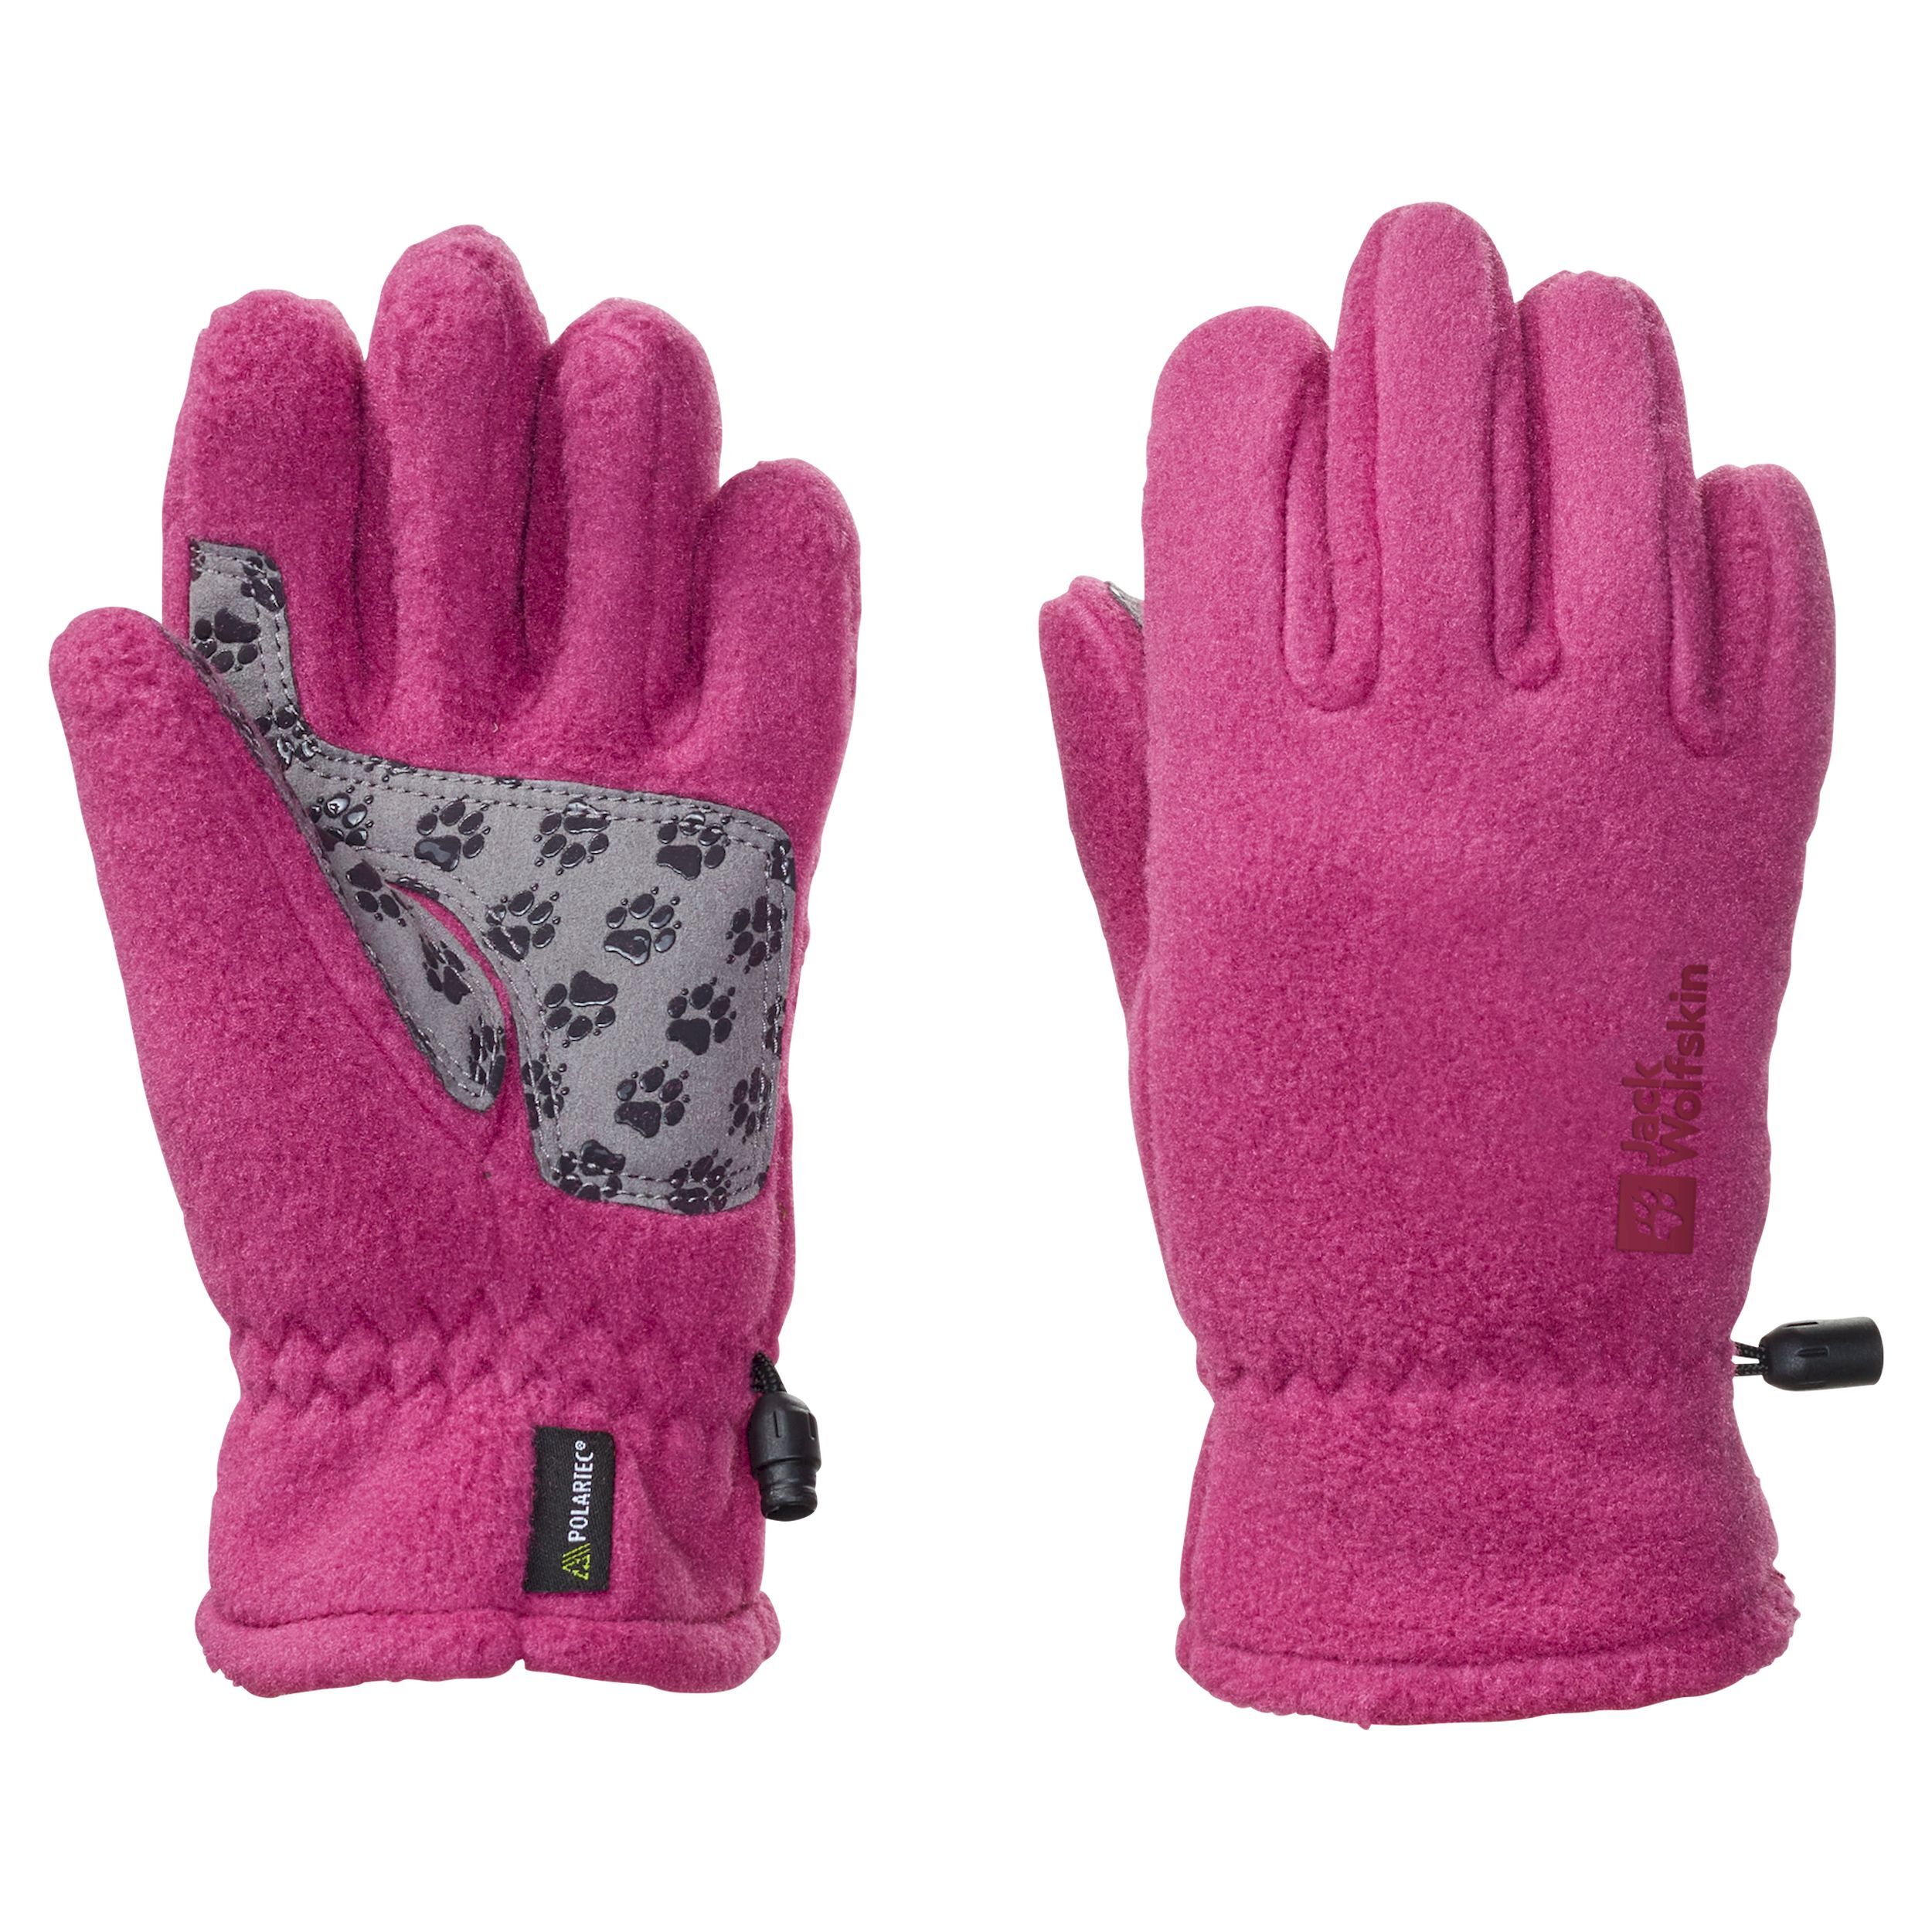 Jack Wolfskin Fleece Glove - Walking gloves - Kids